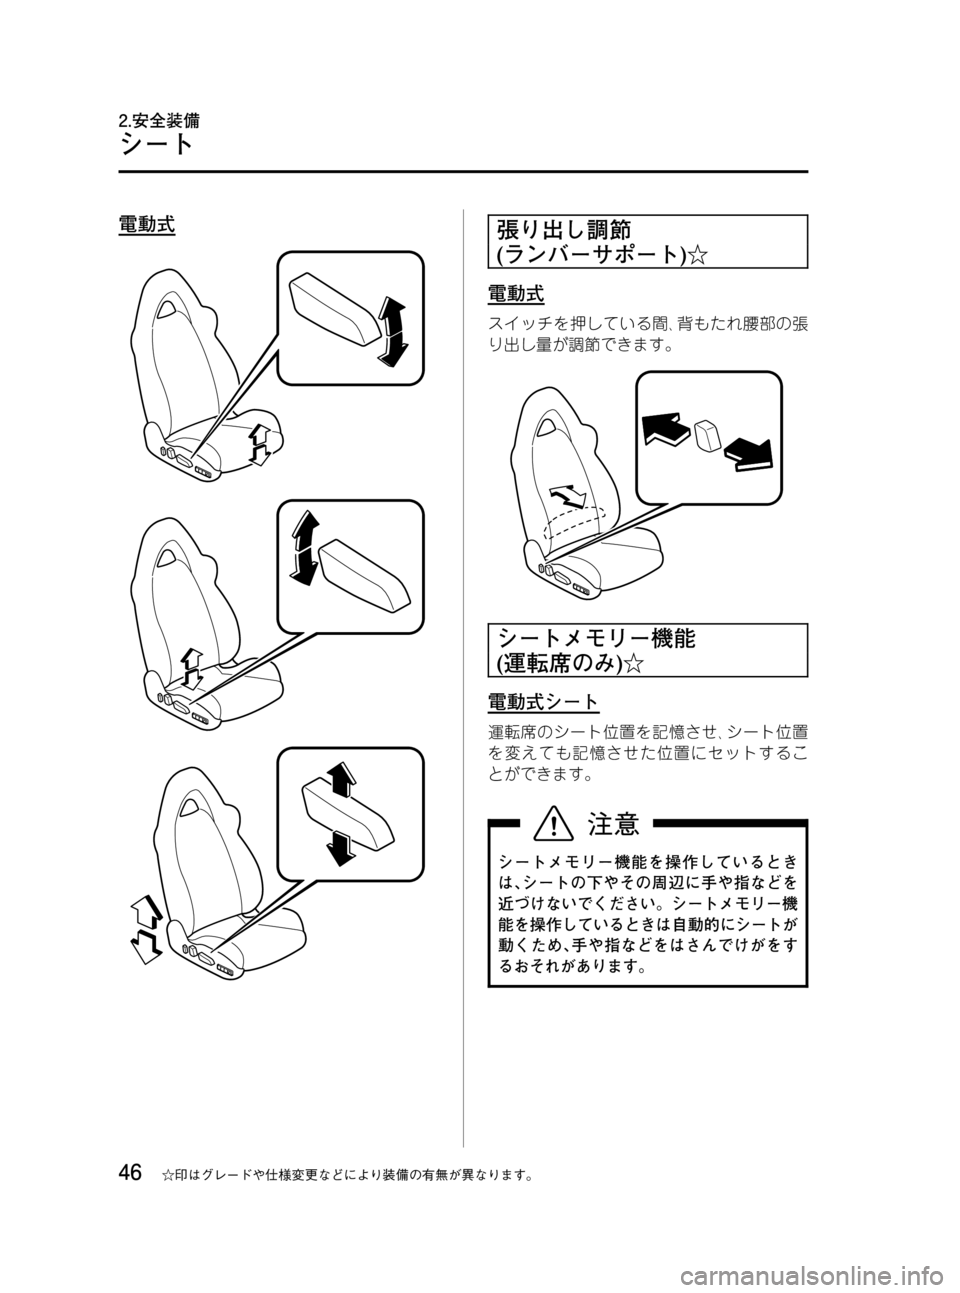 MAZDA MODEL RX 8 2008  取扱説明書 (in Japanese) Black plate (46,1)
電動式張り出し調節
(ランバーサポート)☆
電動式
スイッチを押している間､背もたれ腰部の張
り出し量が調節できます。
シートメモ